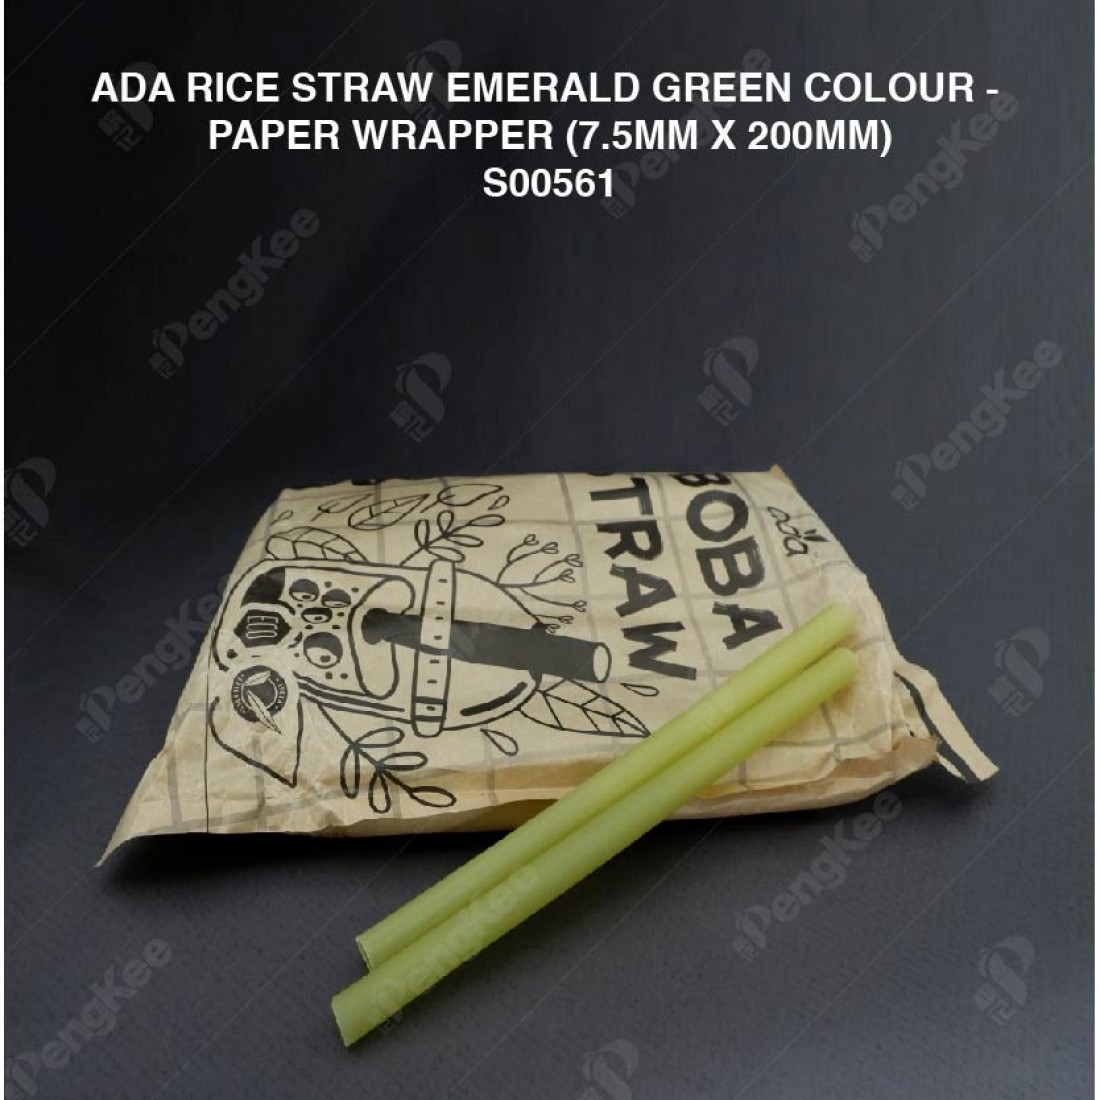 ADA RICE STRAW EMERALD GREEN COLOUR - PAPER WRAPPER (7.5MM X 200MM)(100'S/PKT)